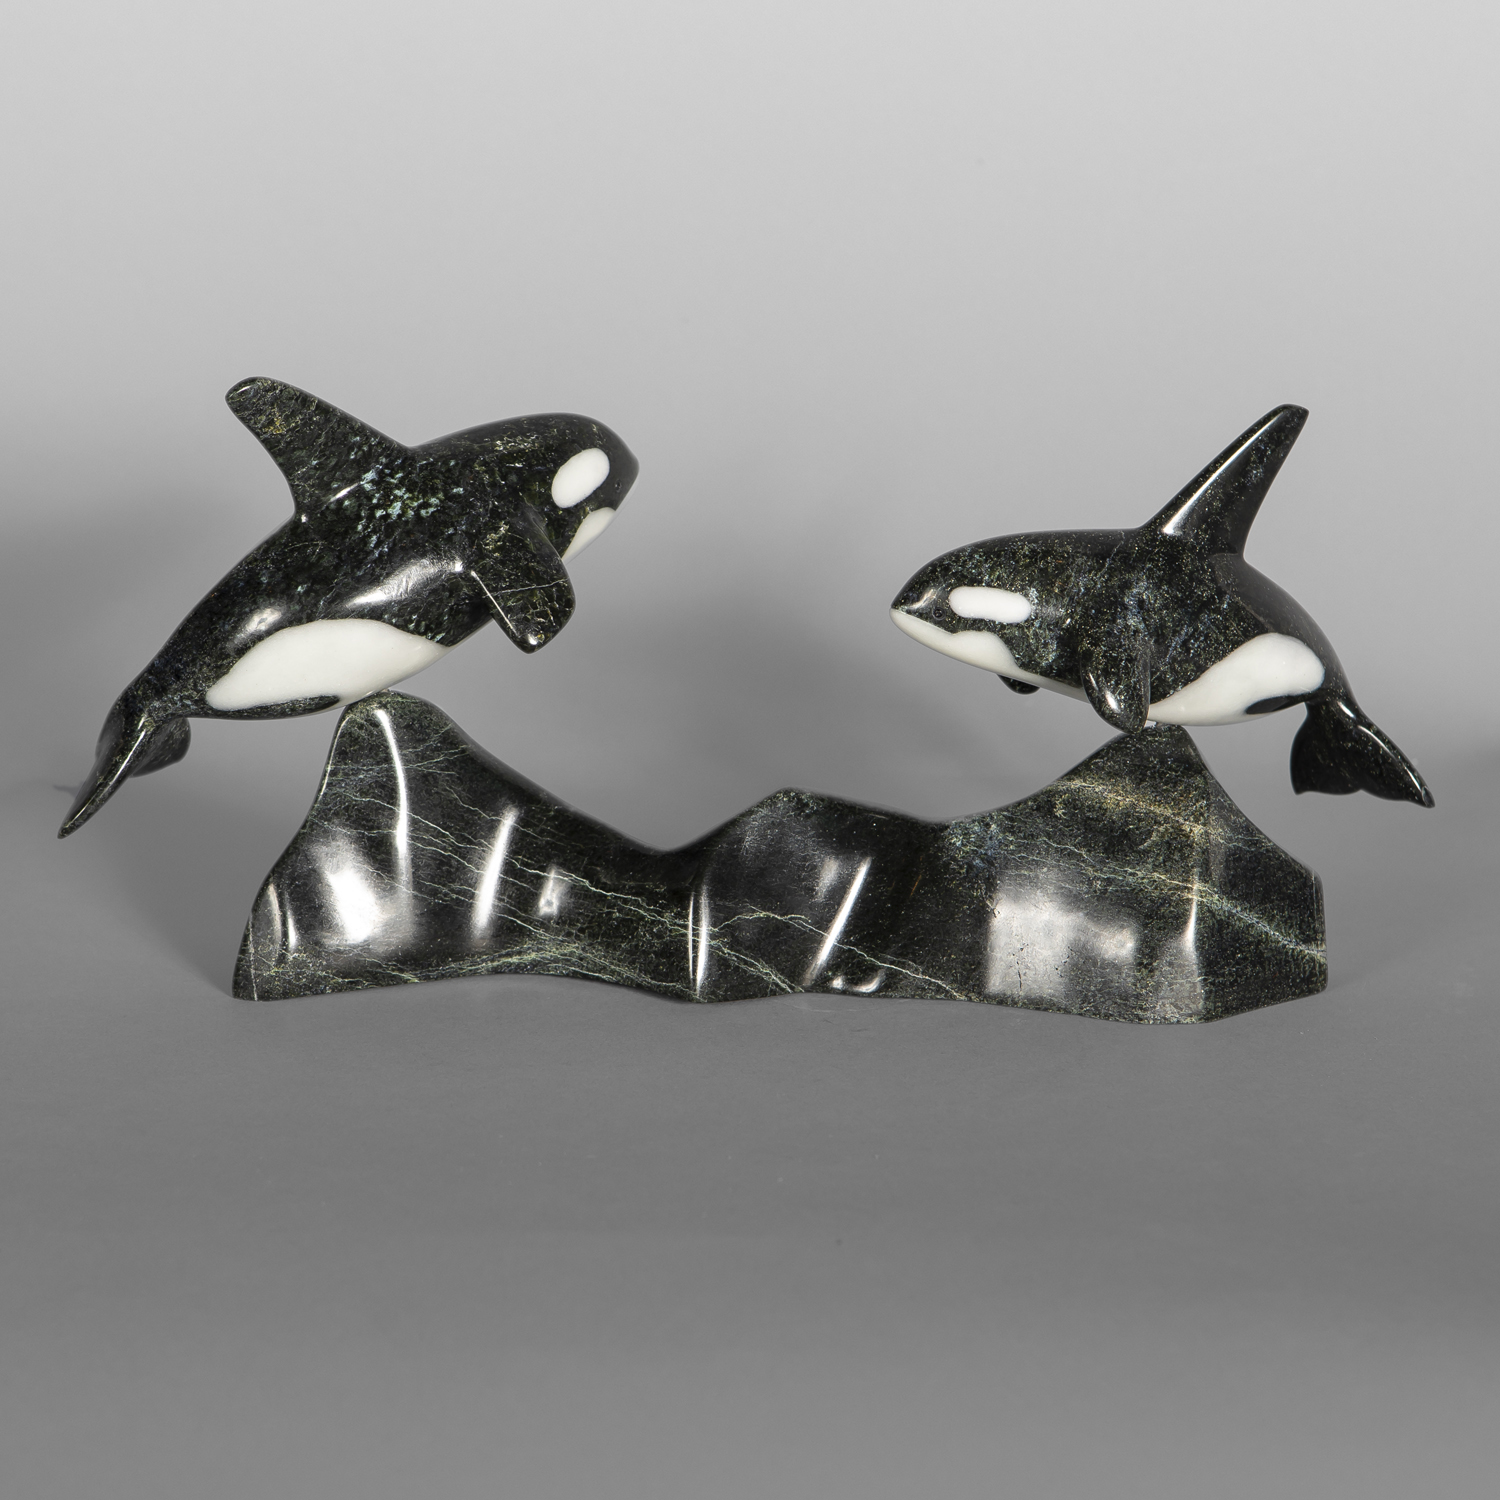 Orca Mother & Calf
Johnny Mathewsie
Inuit
Serpentine, marble
14" x 6" x 4"
$2900